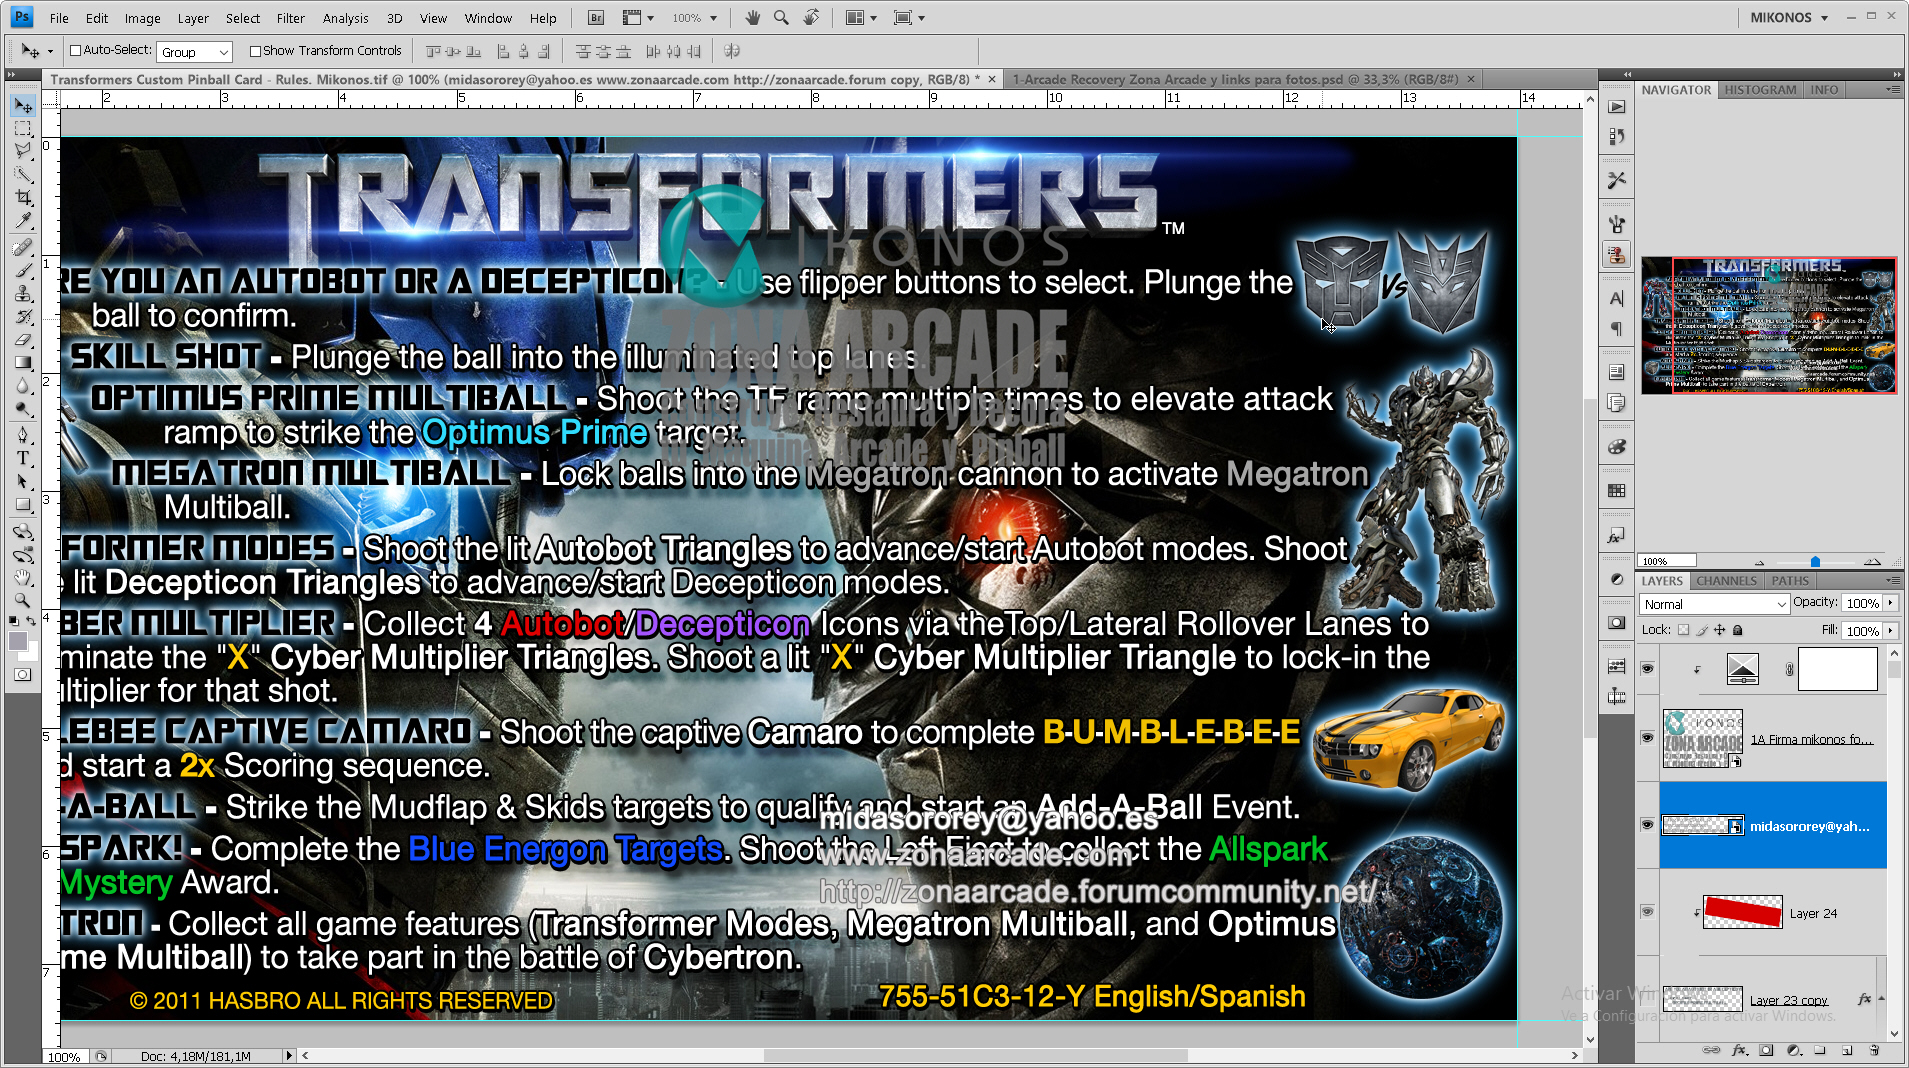 Transformers Custom Pinball Card - Rules. Mikonos2